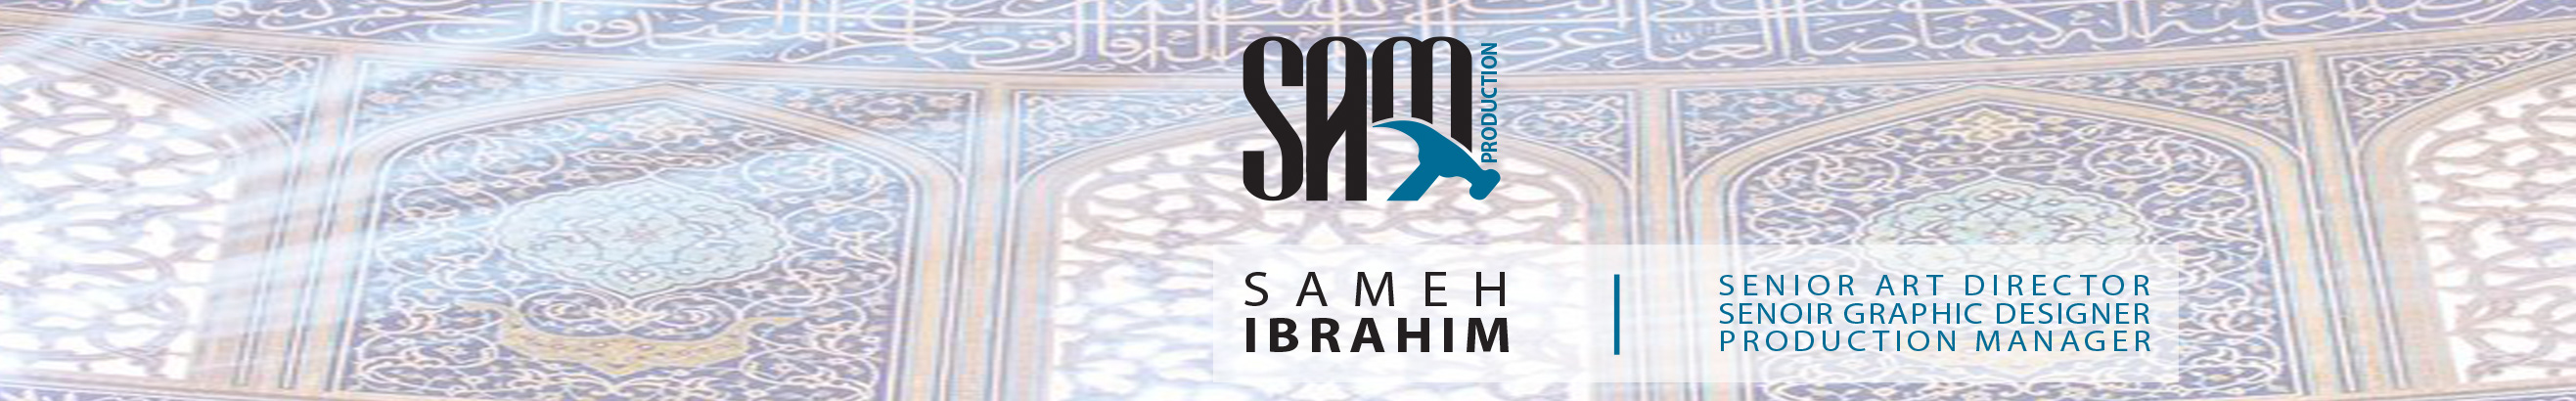 sameh ibrahim's profile banner